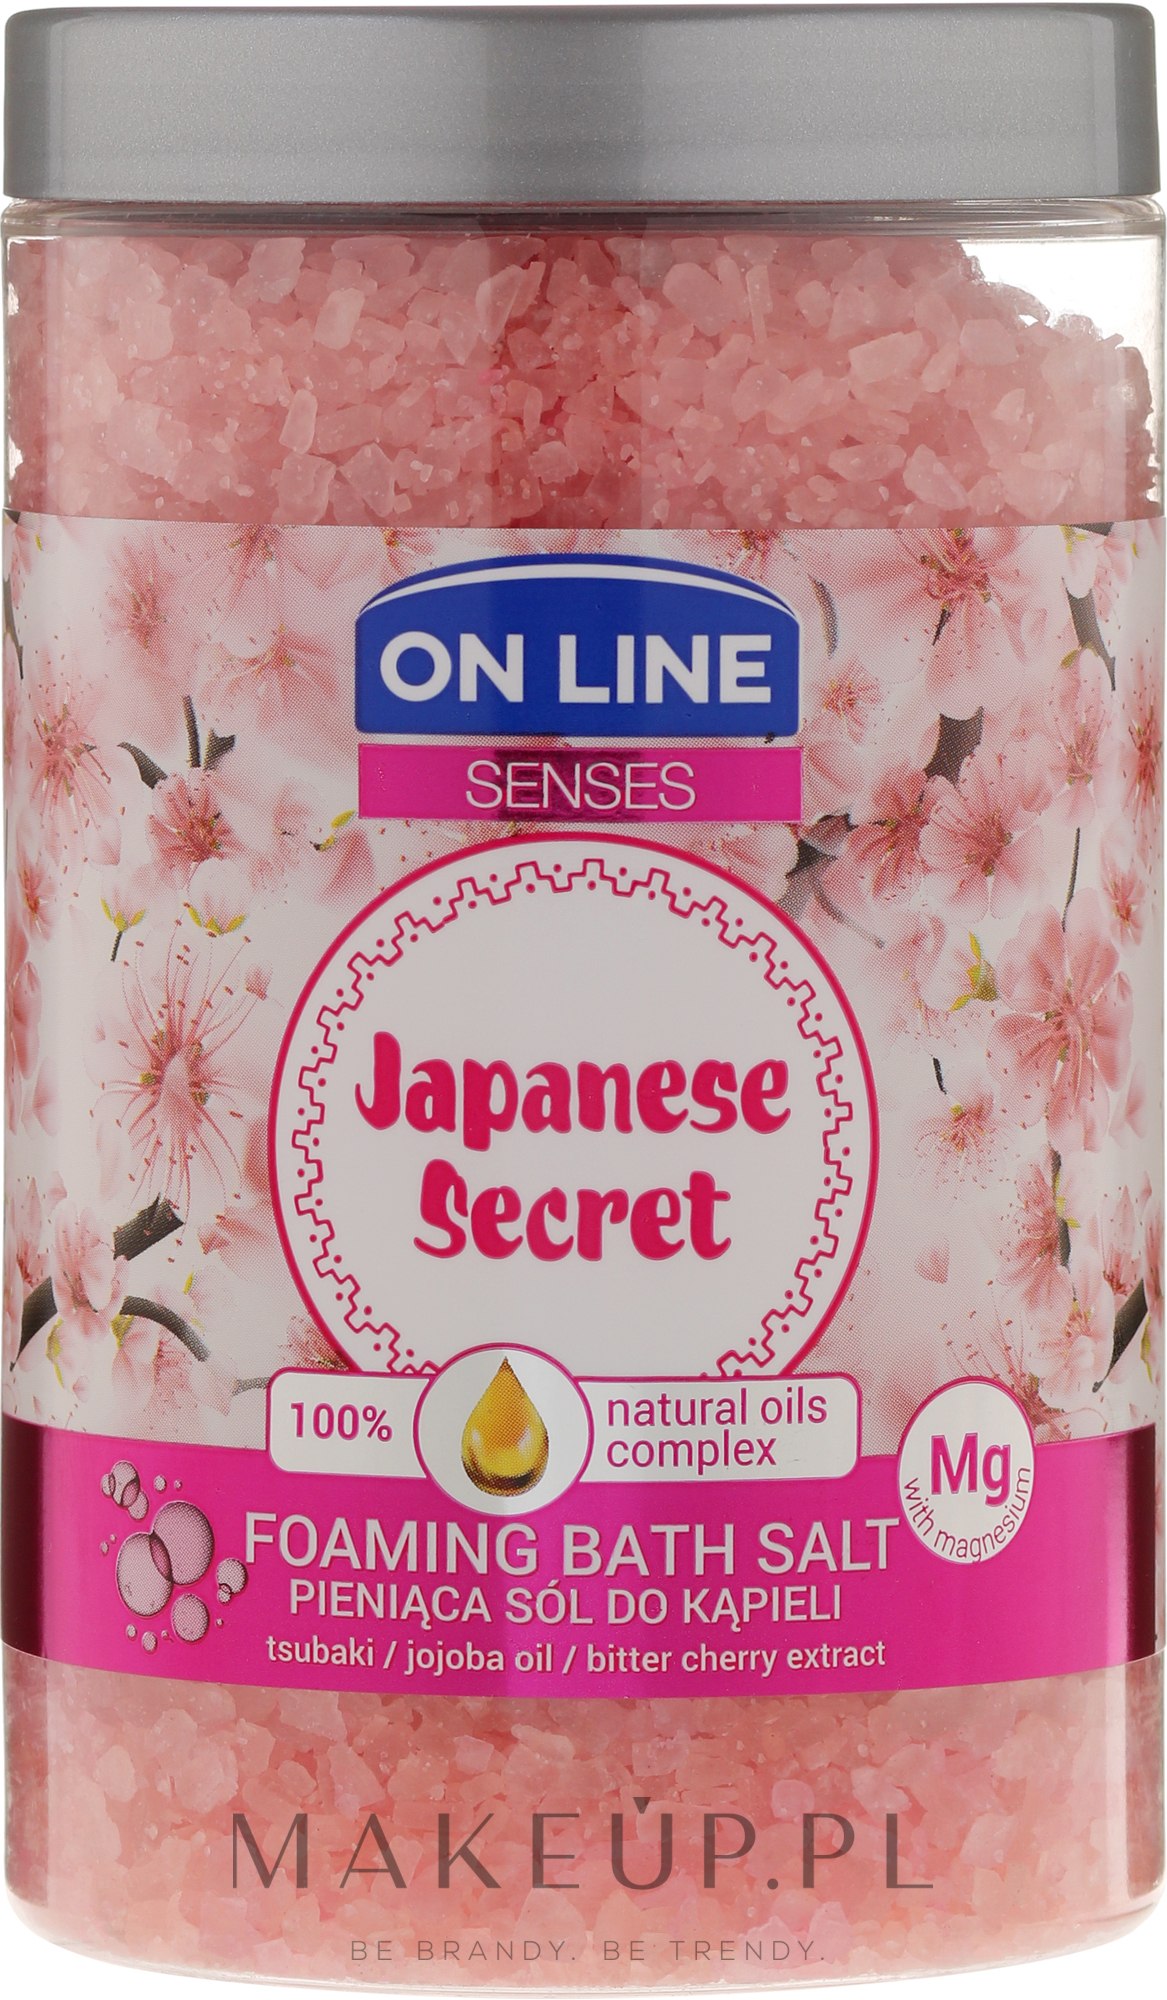 Pieniąca sól do kąpieli z olejami tsubaki i jojoba - On Line Senses Japanese Secret — Zdjęcie 480 g